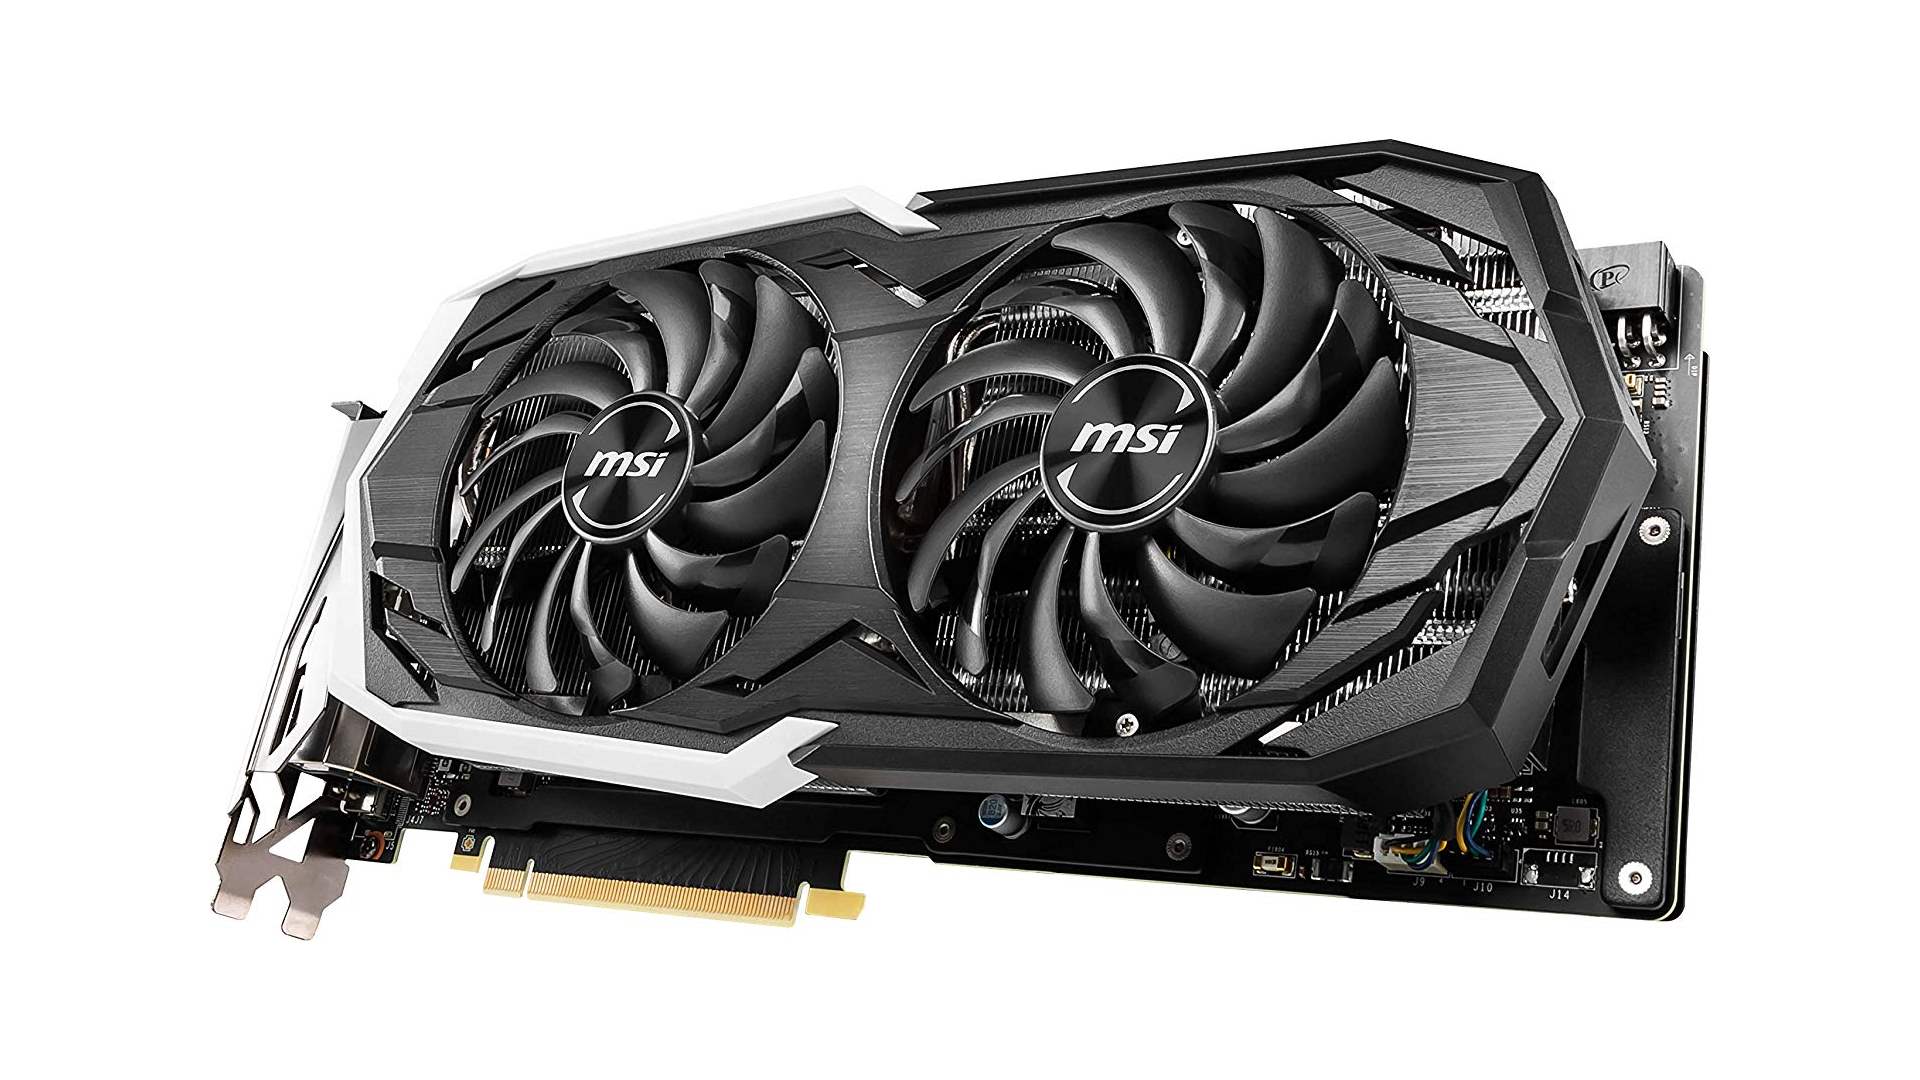 MSI RTX 8G review: the best-value Nvidia Turing GPU so far | PCGamesN